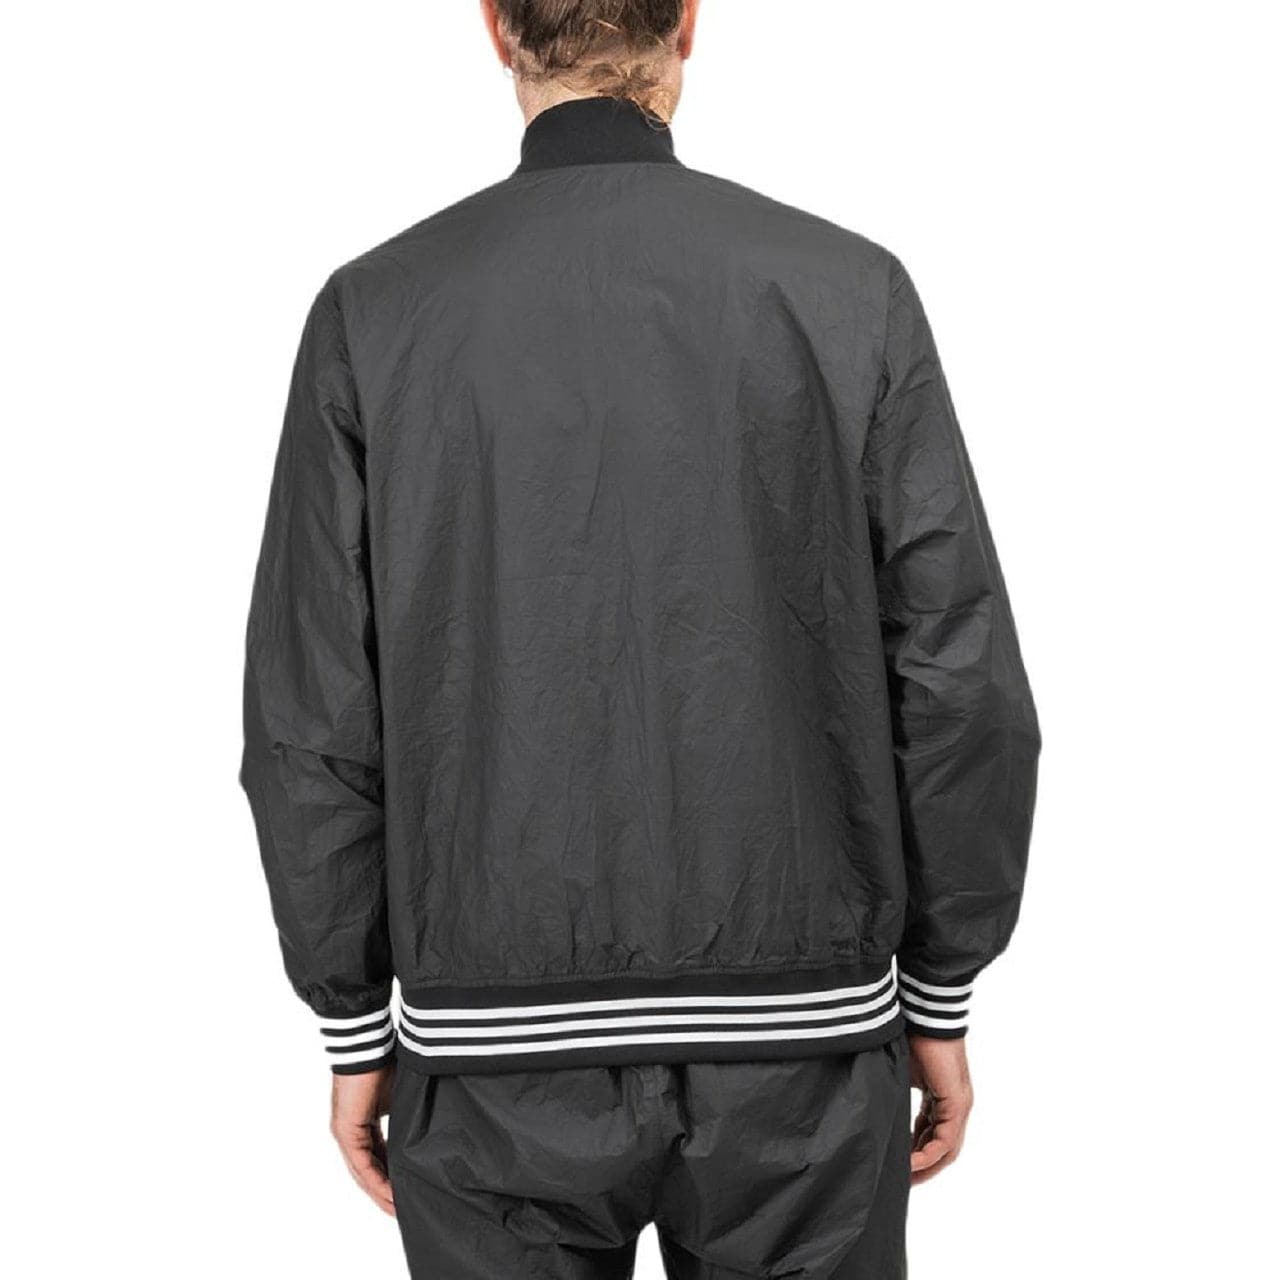 adidas x Human Made Track Top Jacket (Schwarz)  - Allike Store